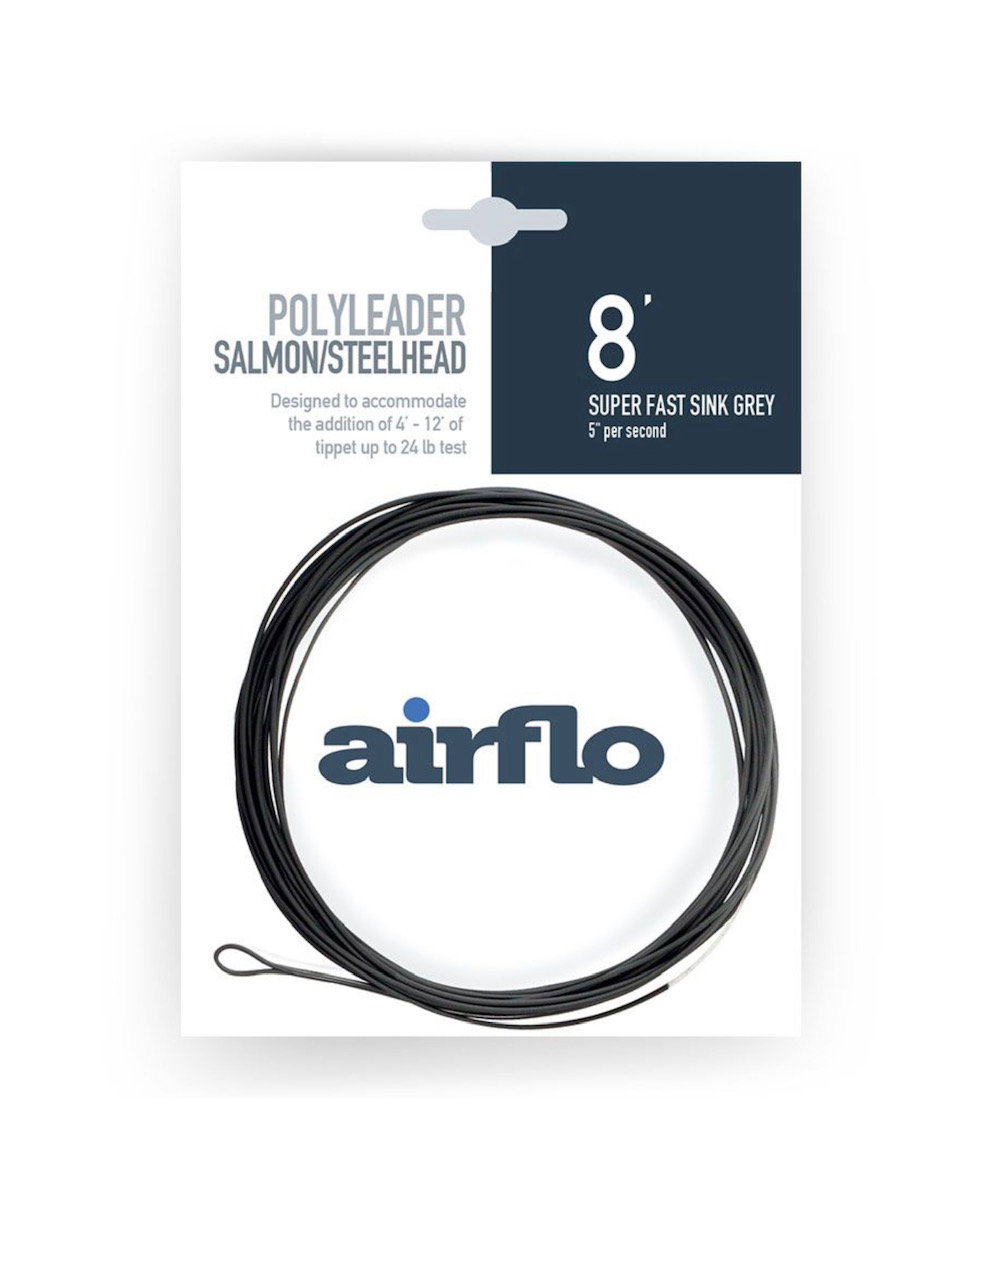 Airflo Polyleader Salmon/Steelhead  - 5' - Super Fast Sink Grey (5ips)